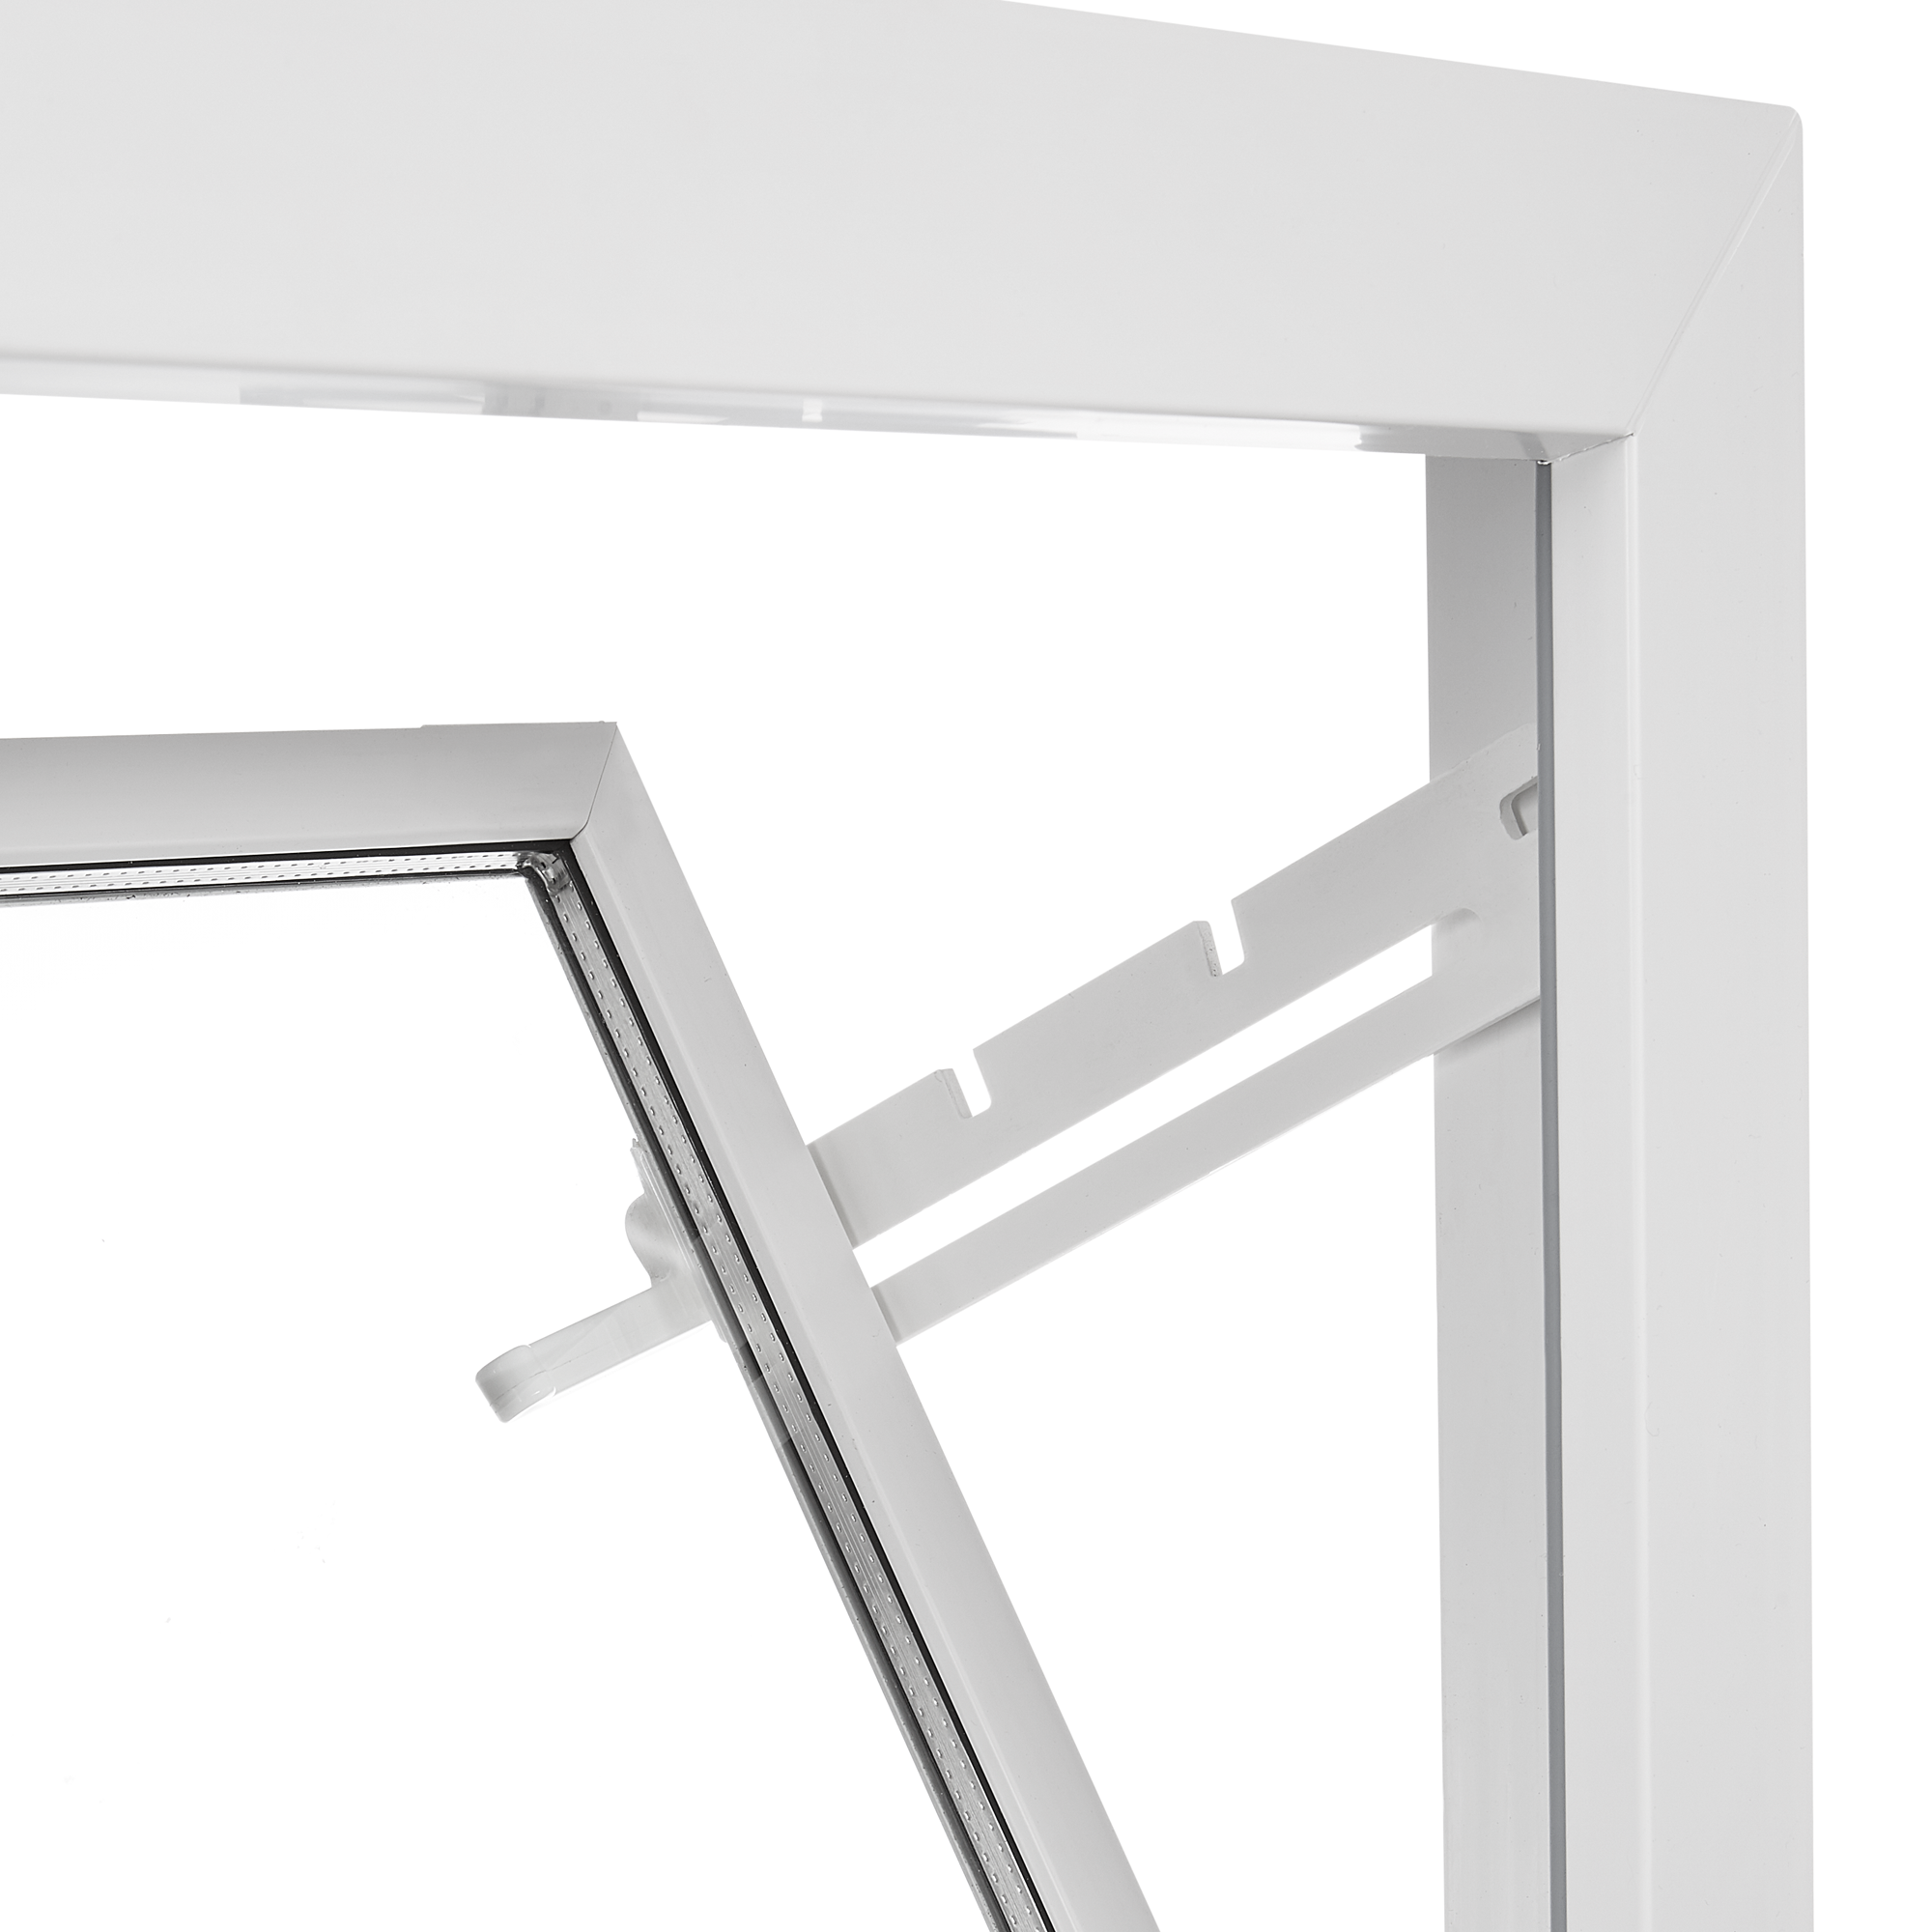 Kippfenster weiß 1-flügelig 100 x 60 cm + product picture